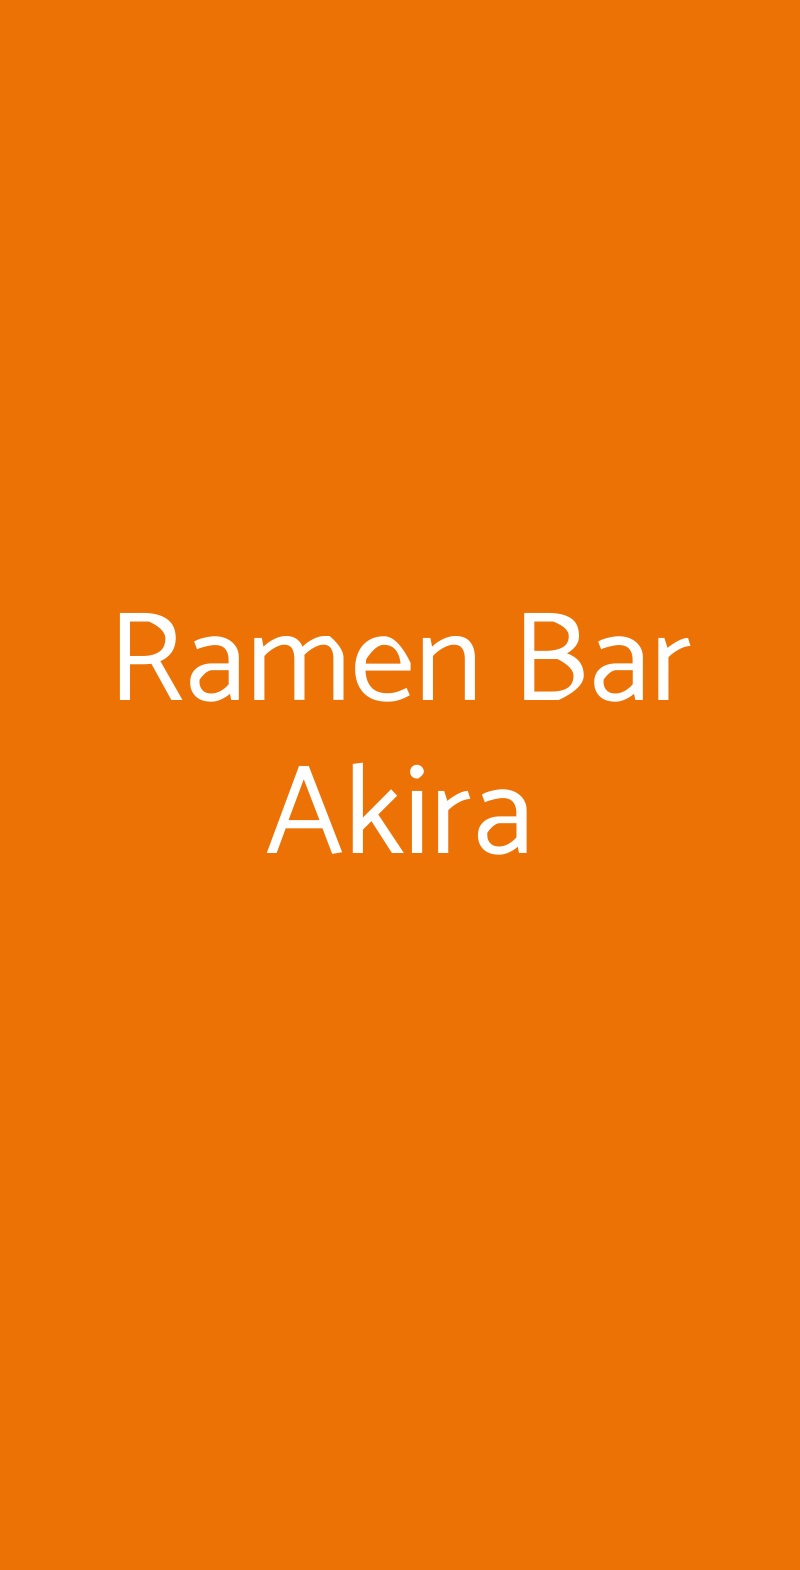 Ramen Bar Akira Roma menù 1 pagina